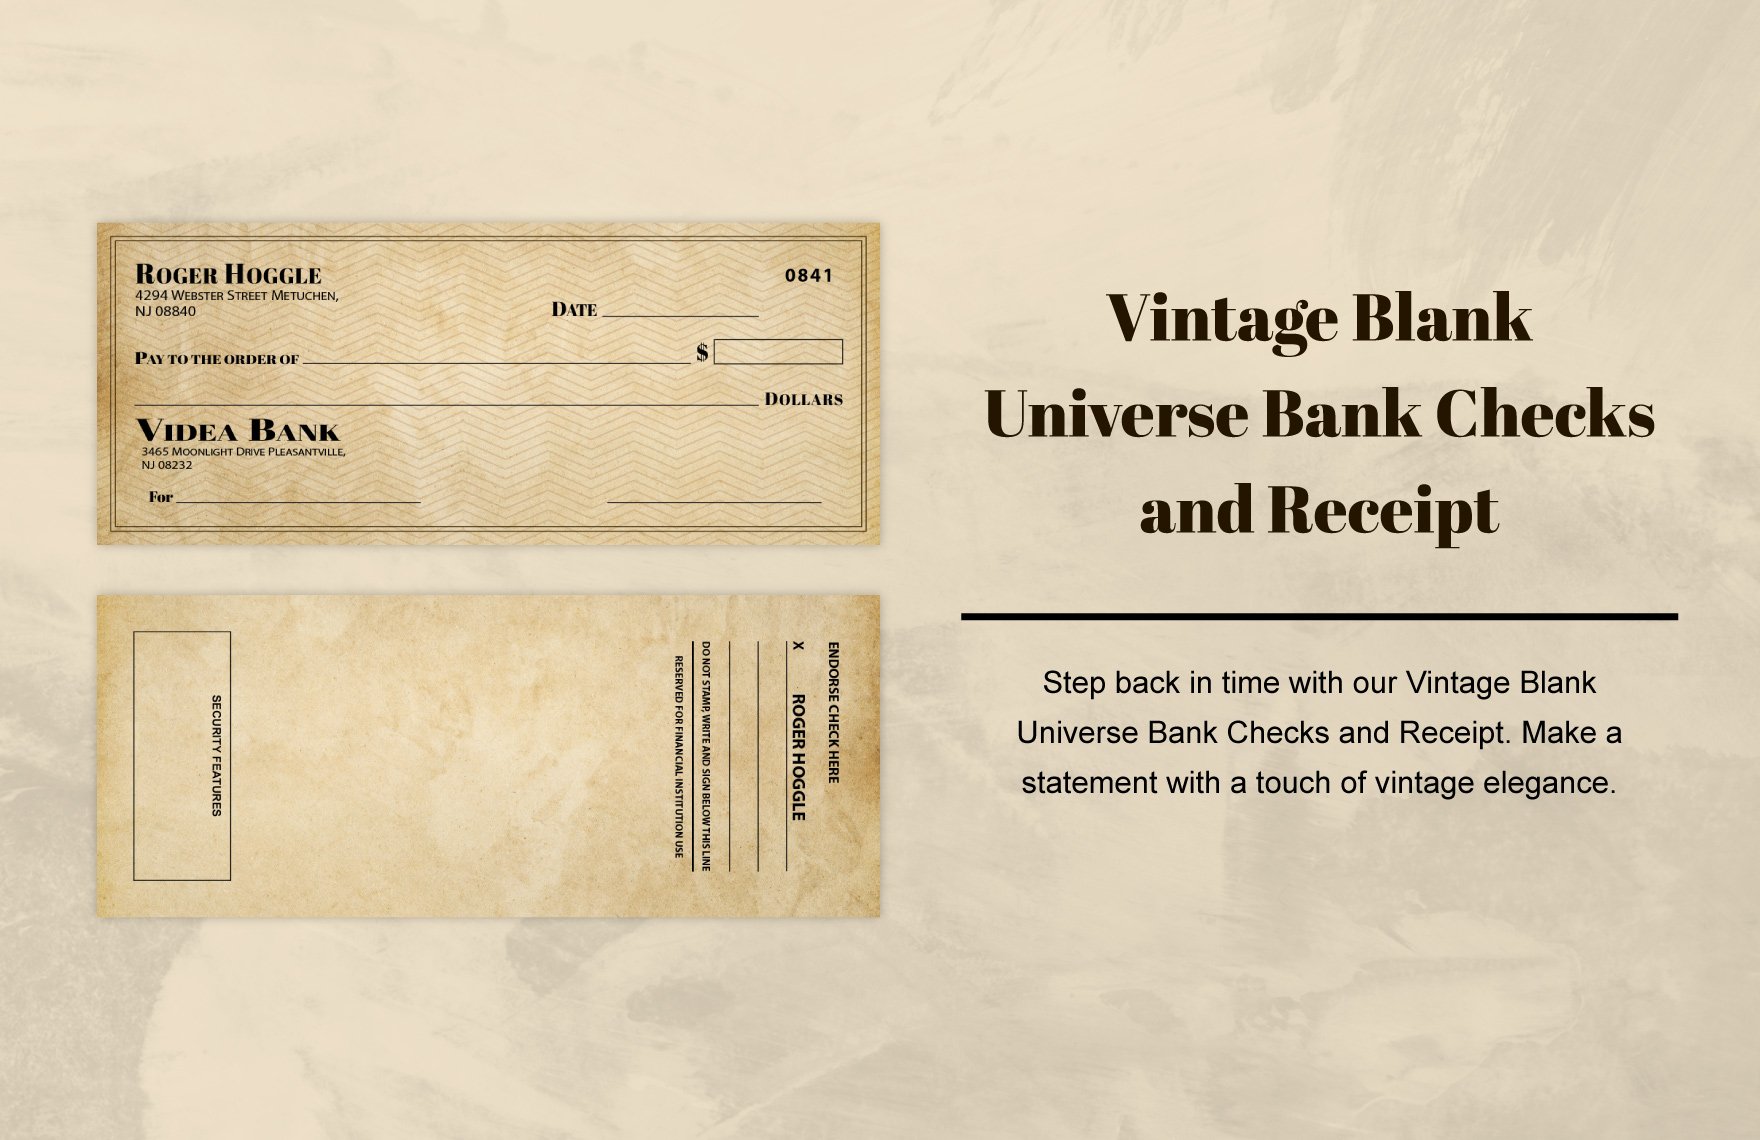 Vintage Blank Universe Bank Checks and Receipt